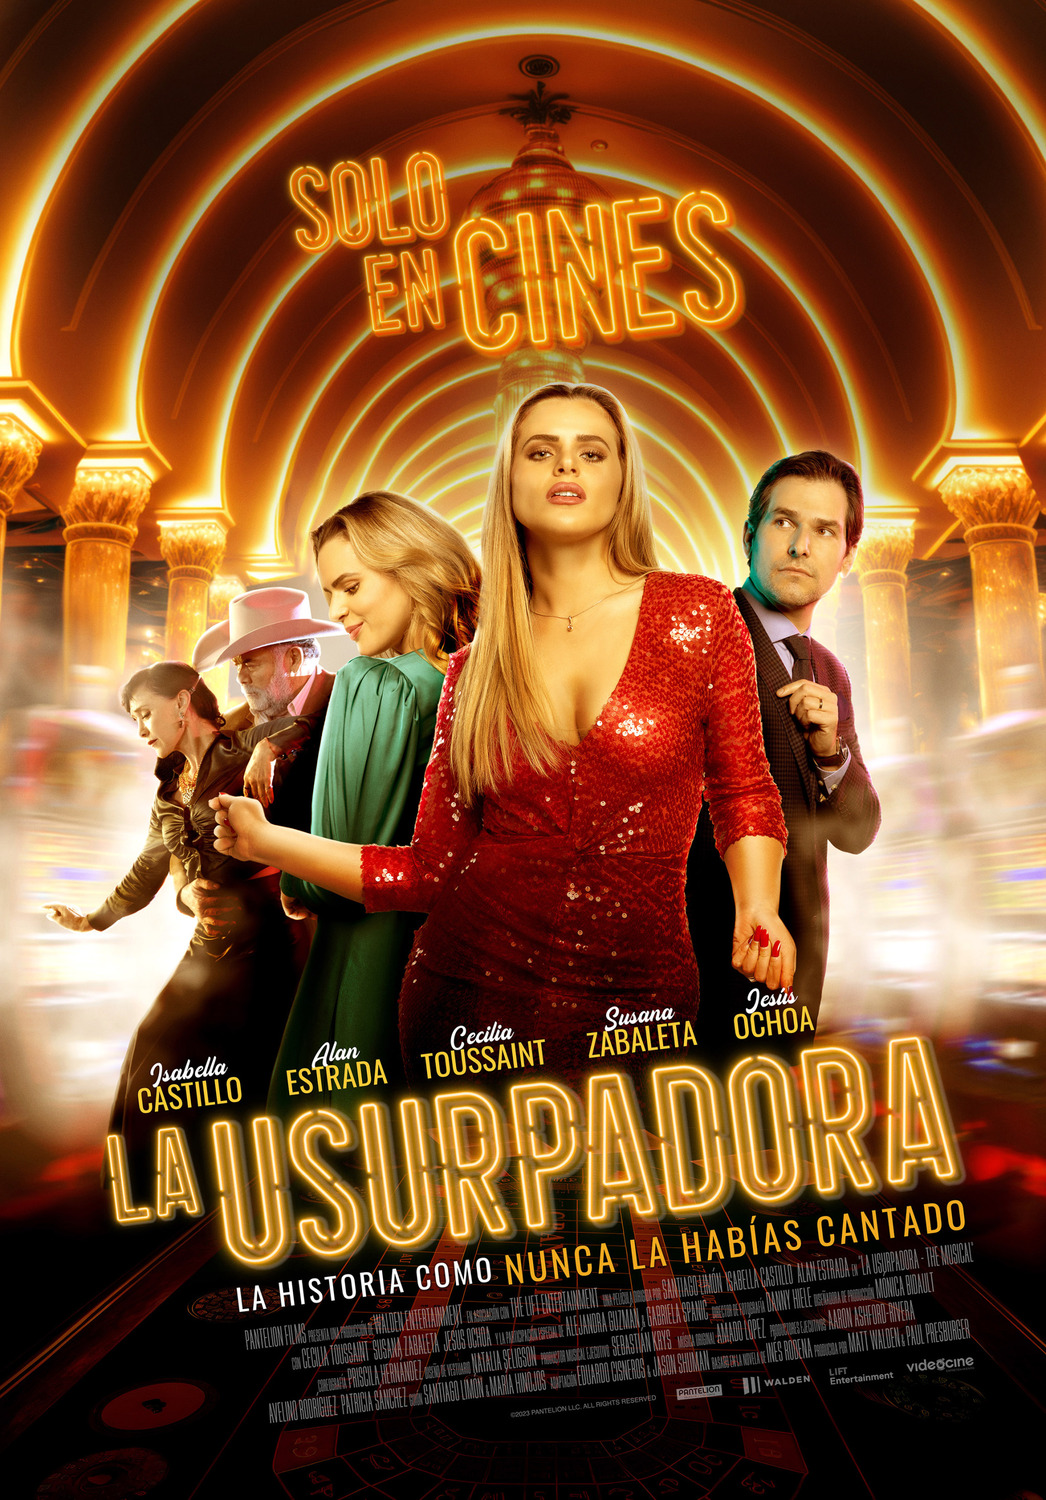 La Usurpadora, the Musical